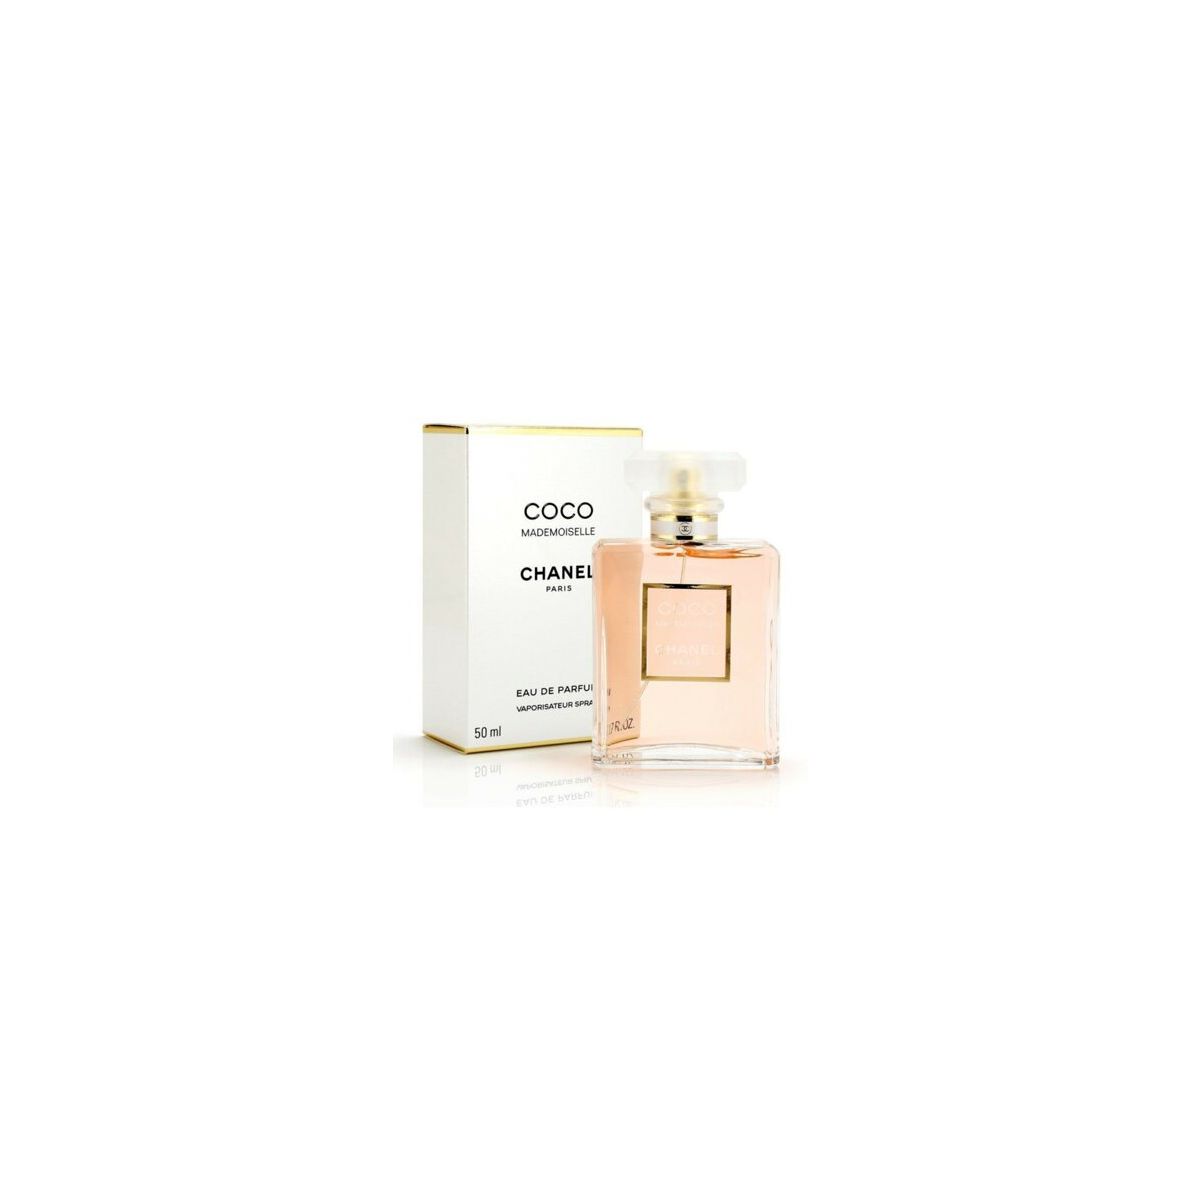 Chanel Coco Mademoiselle - Eau de Parfum, 50 ml